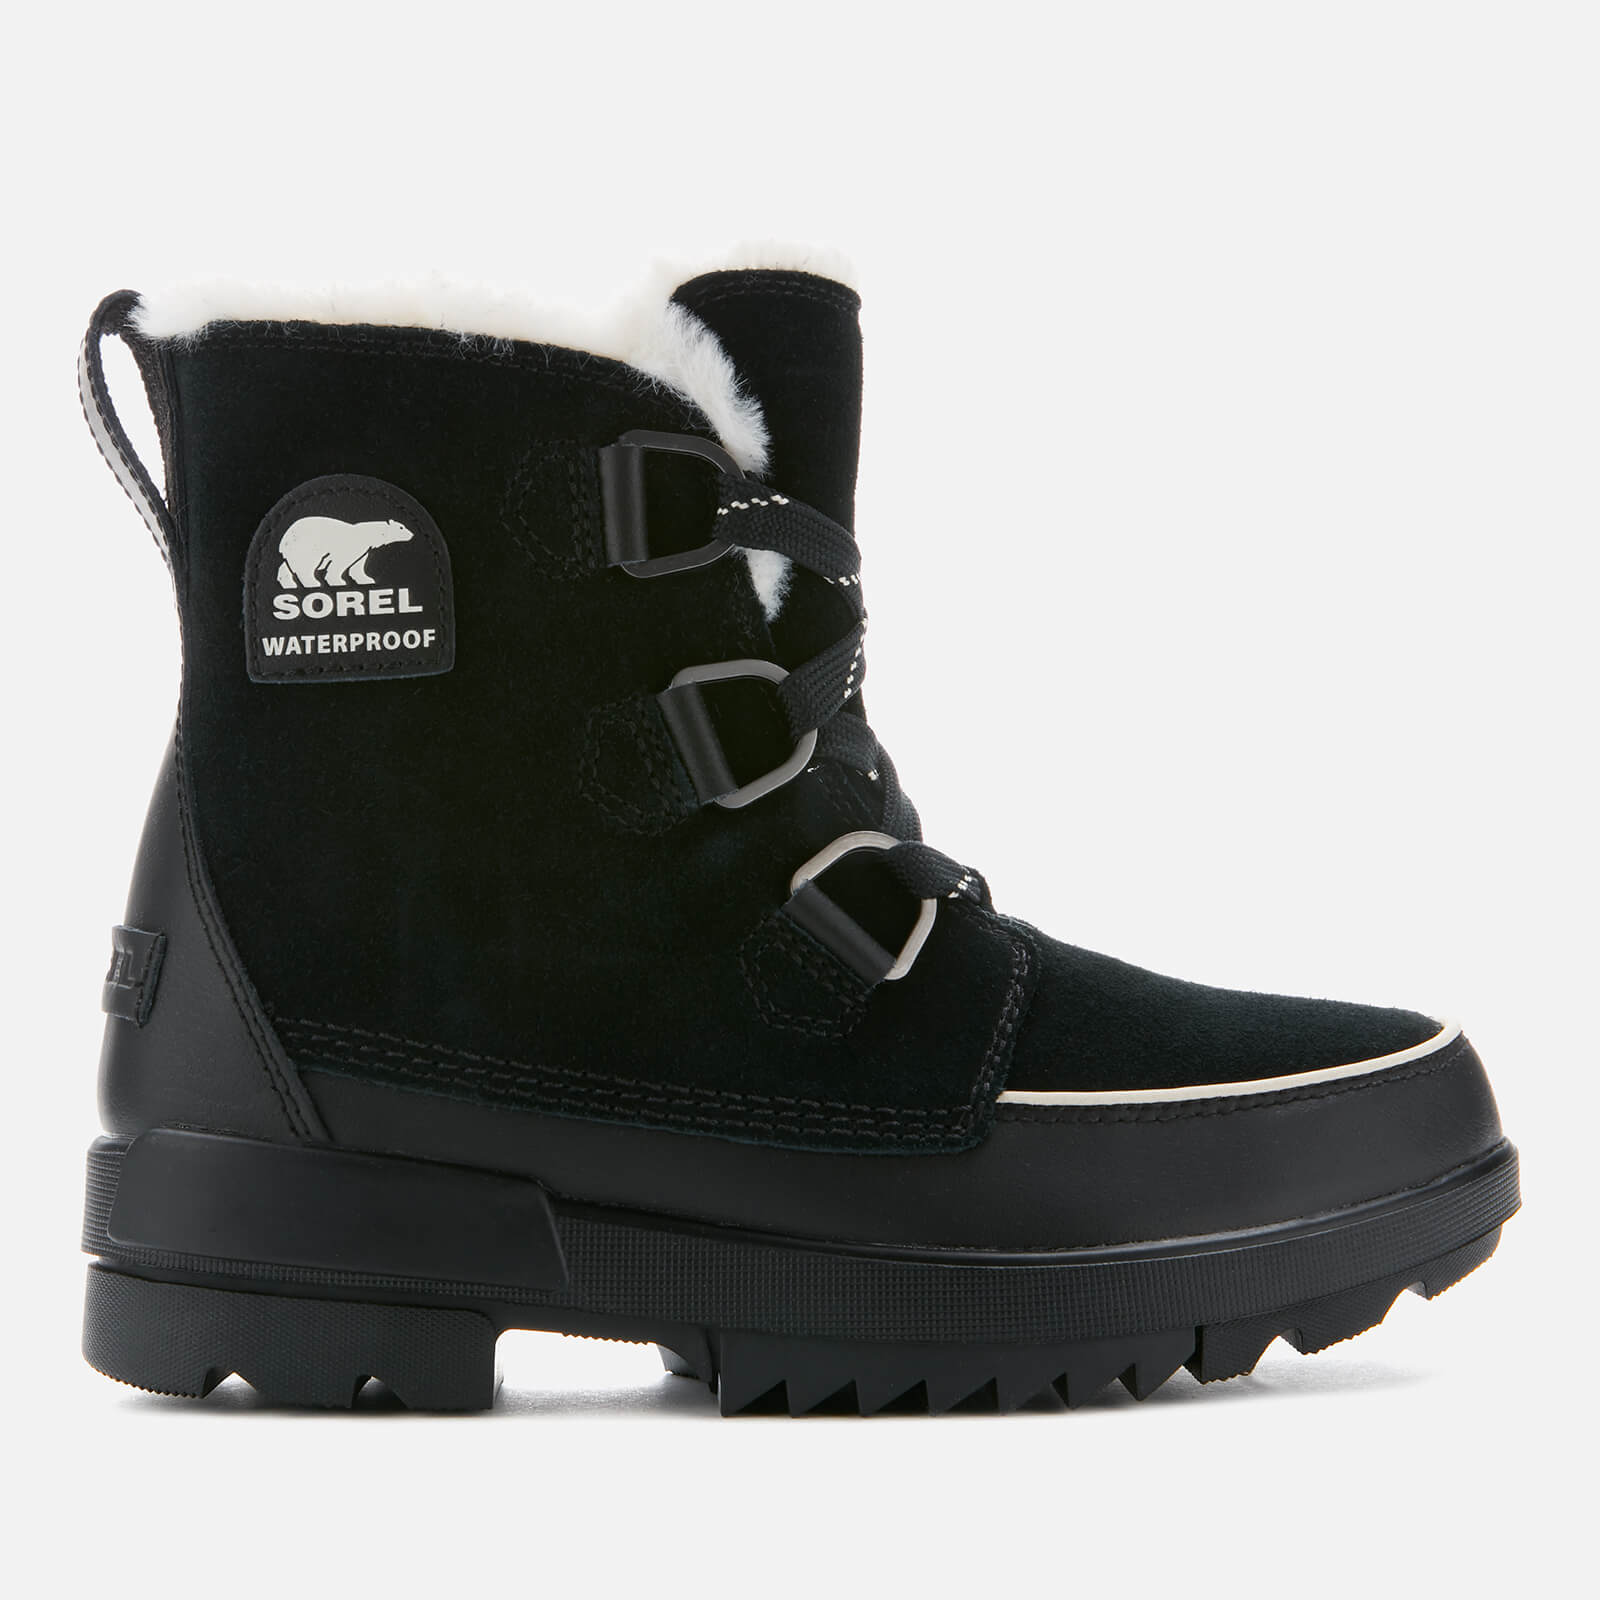 Sorel Women’s Torino Waterproof Suede Hiking Style Boots - Black